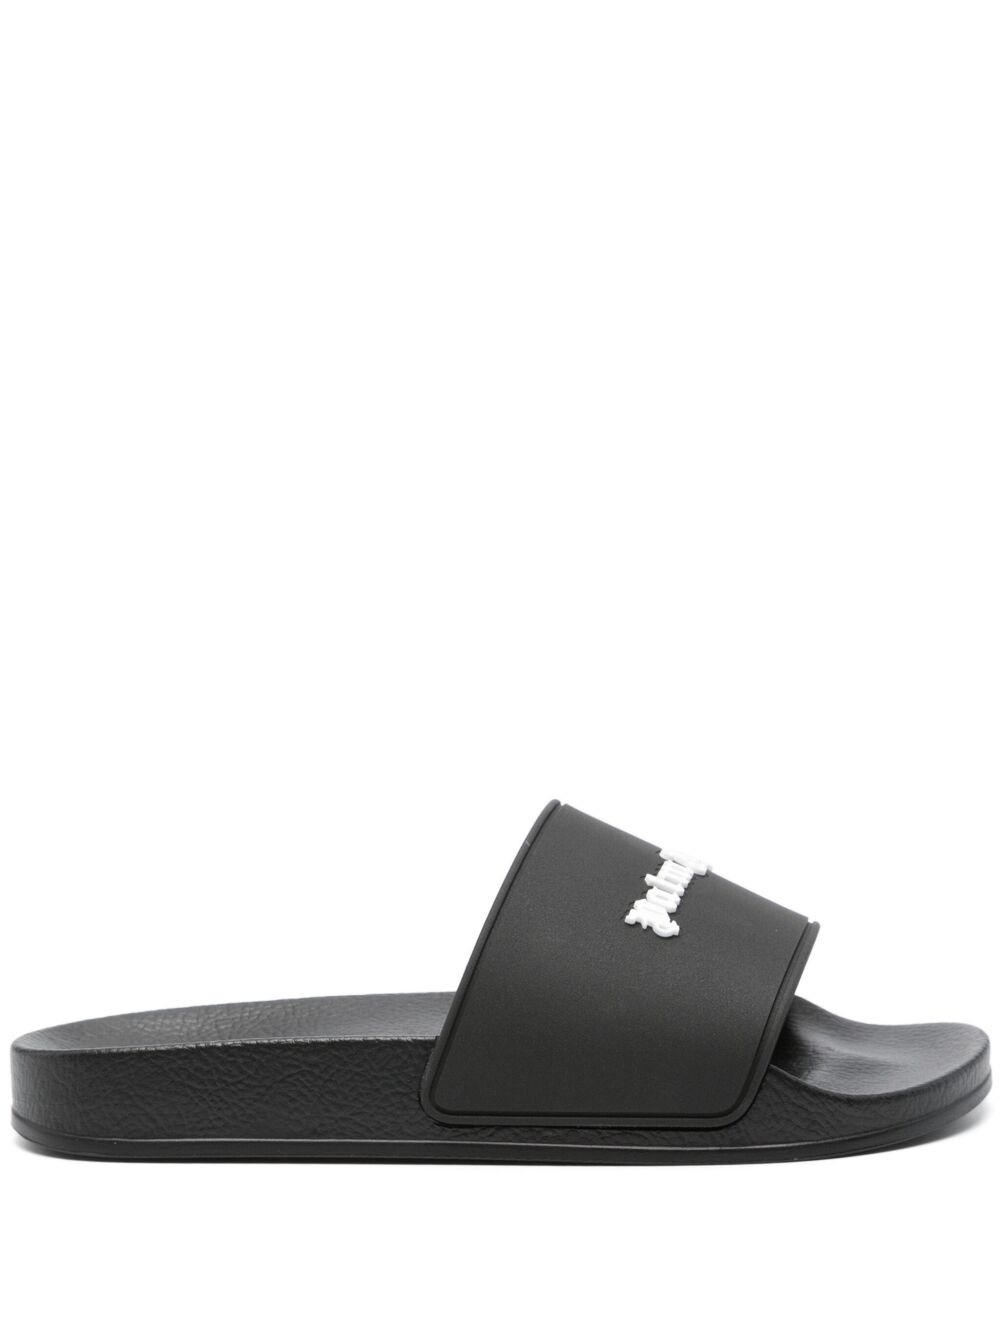 Slides sandals with embossed logo - 1